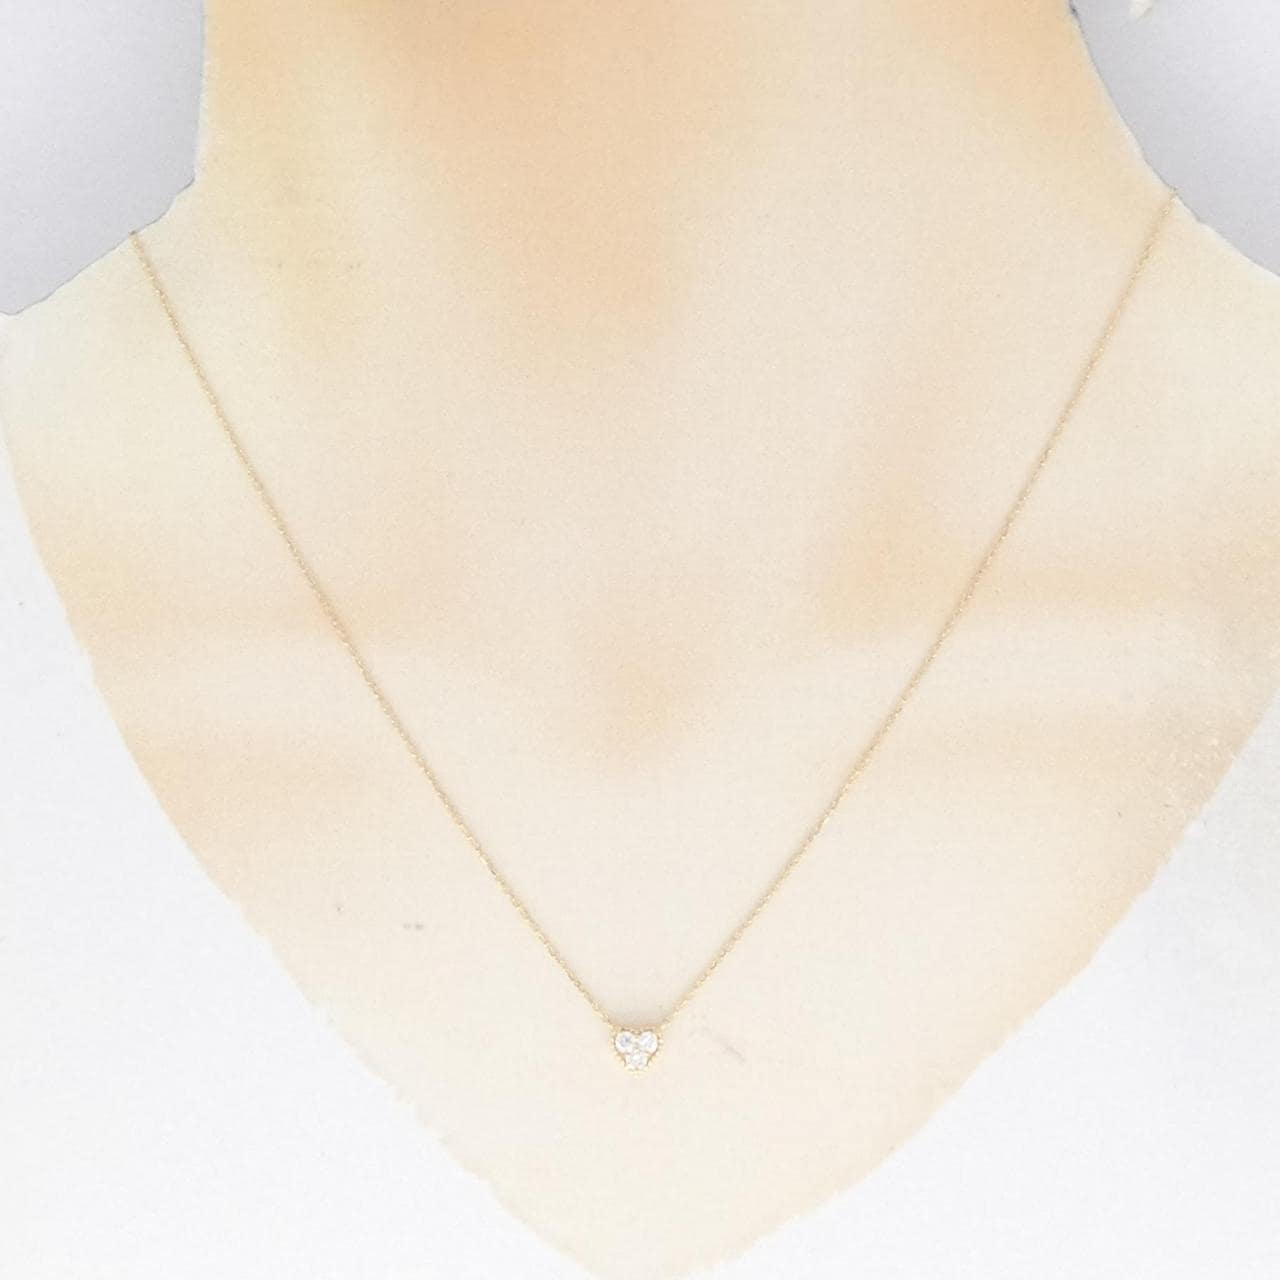 VENDOME heart Diamond necklace 0.12CT